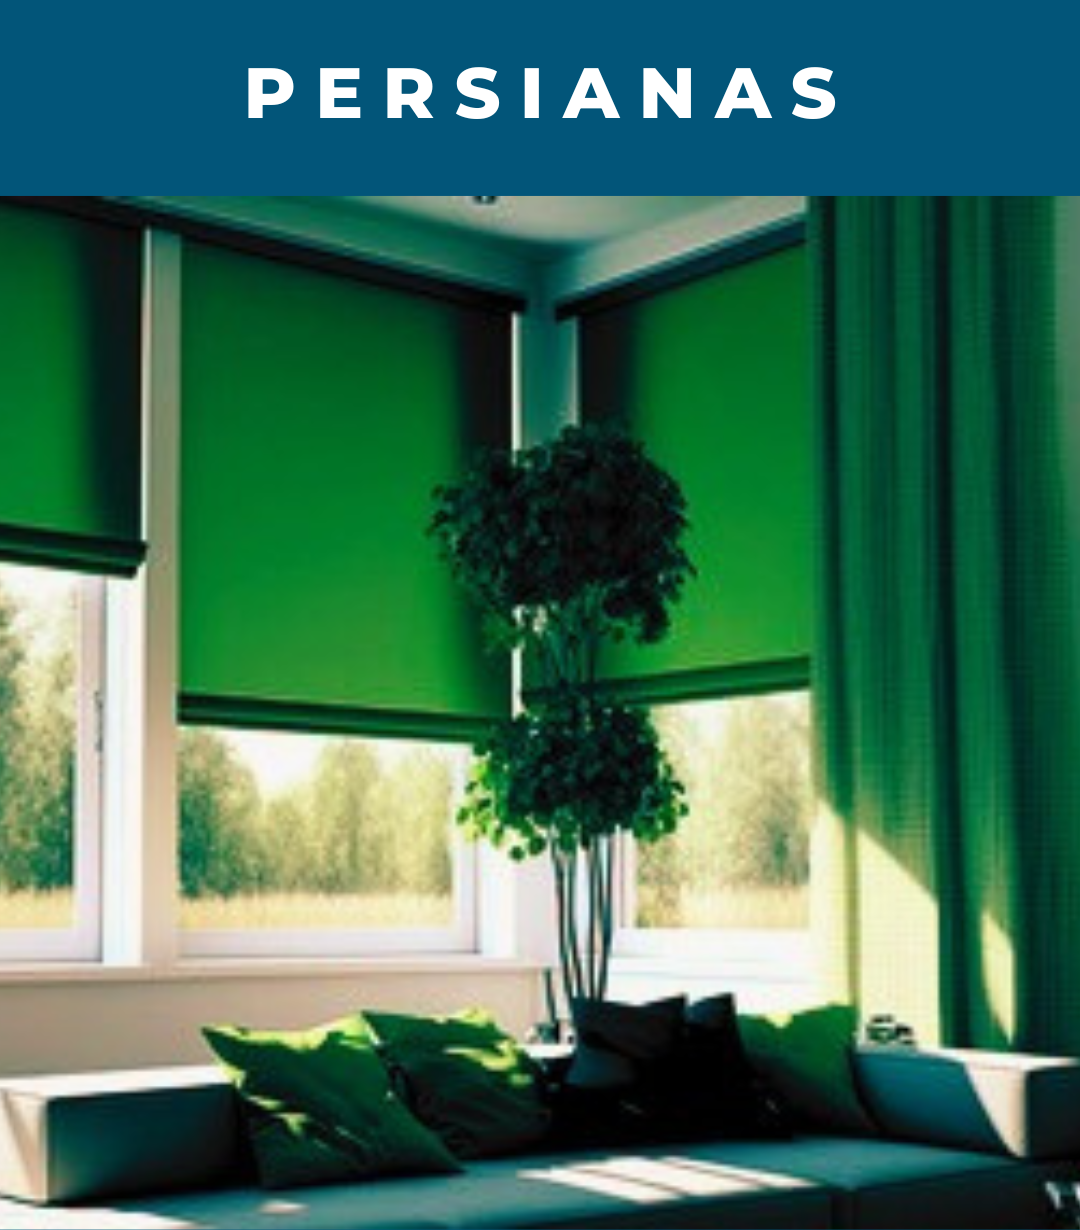 persiana enrollable
persiana parisina
persianas home depot
persianas economicas
persiana enrollable
persianas pvc
persianas verticales
tipos de persianas
persianas modernas
persianas y cortinas

